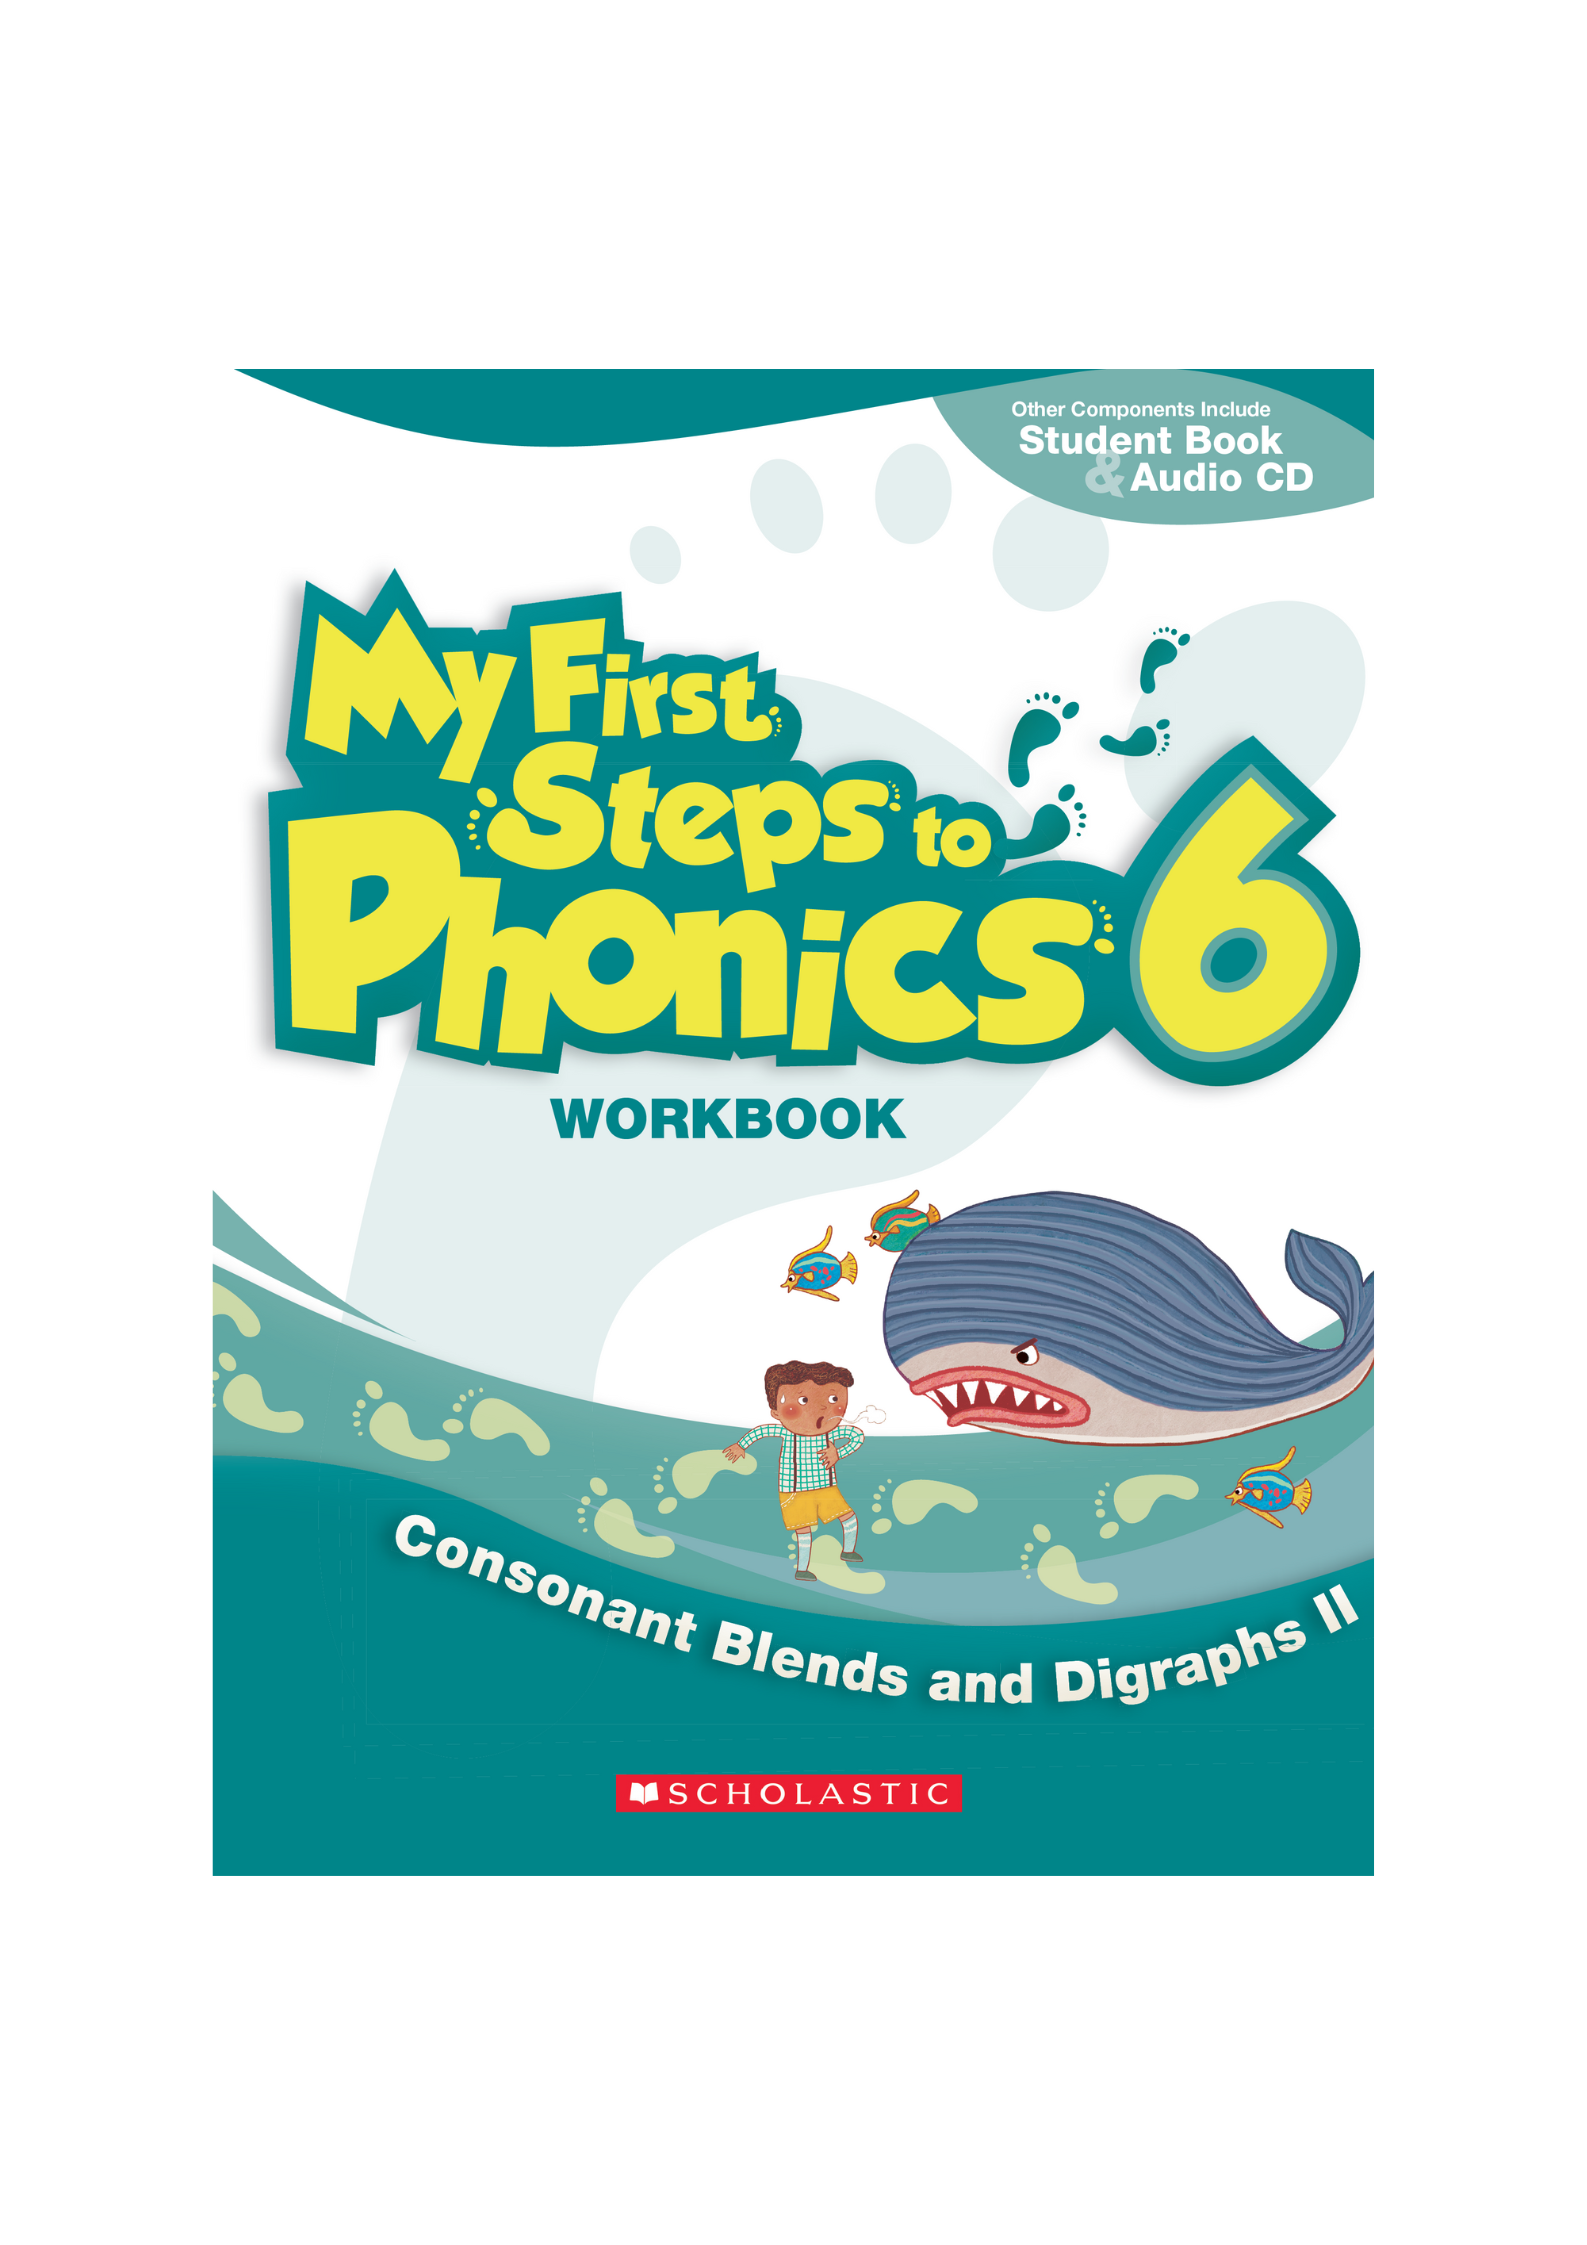 My First Step to Phonics 6: Workbook